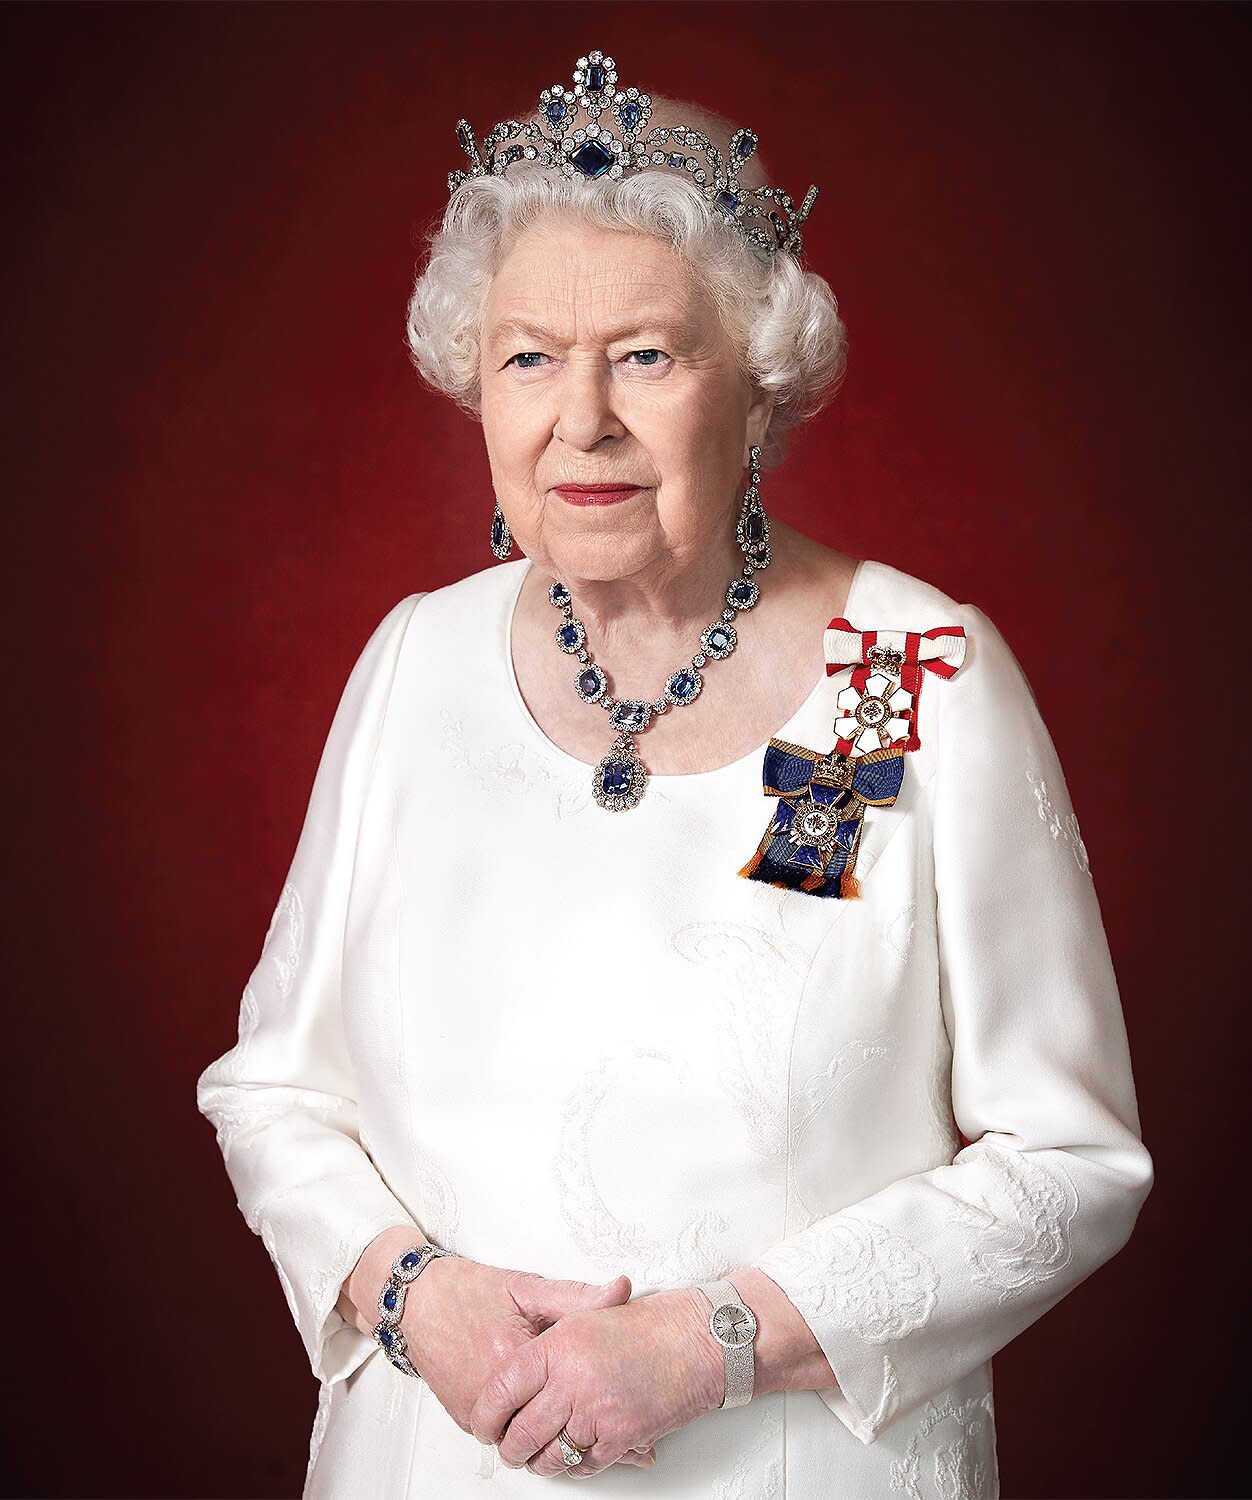 Queen Elizabeth Already Has 'Spectacular' Plans for Her Platinum